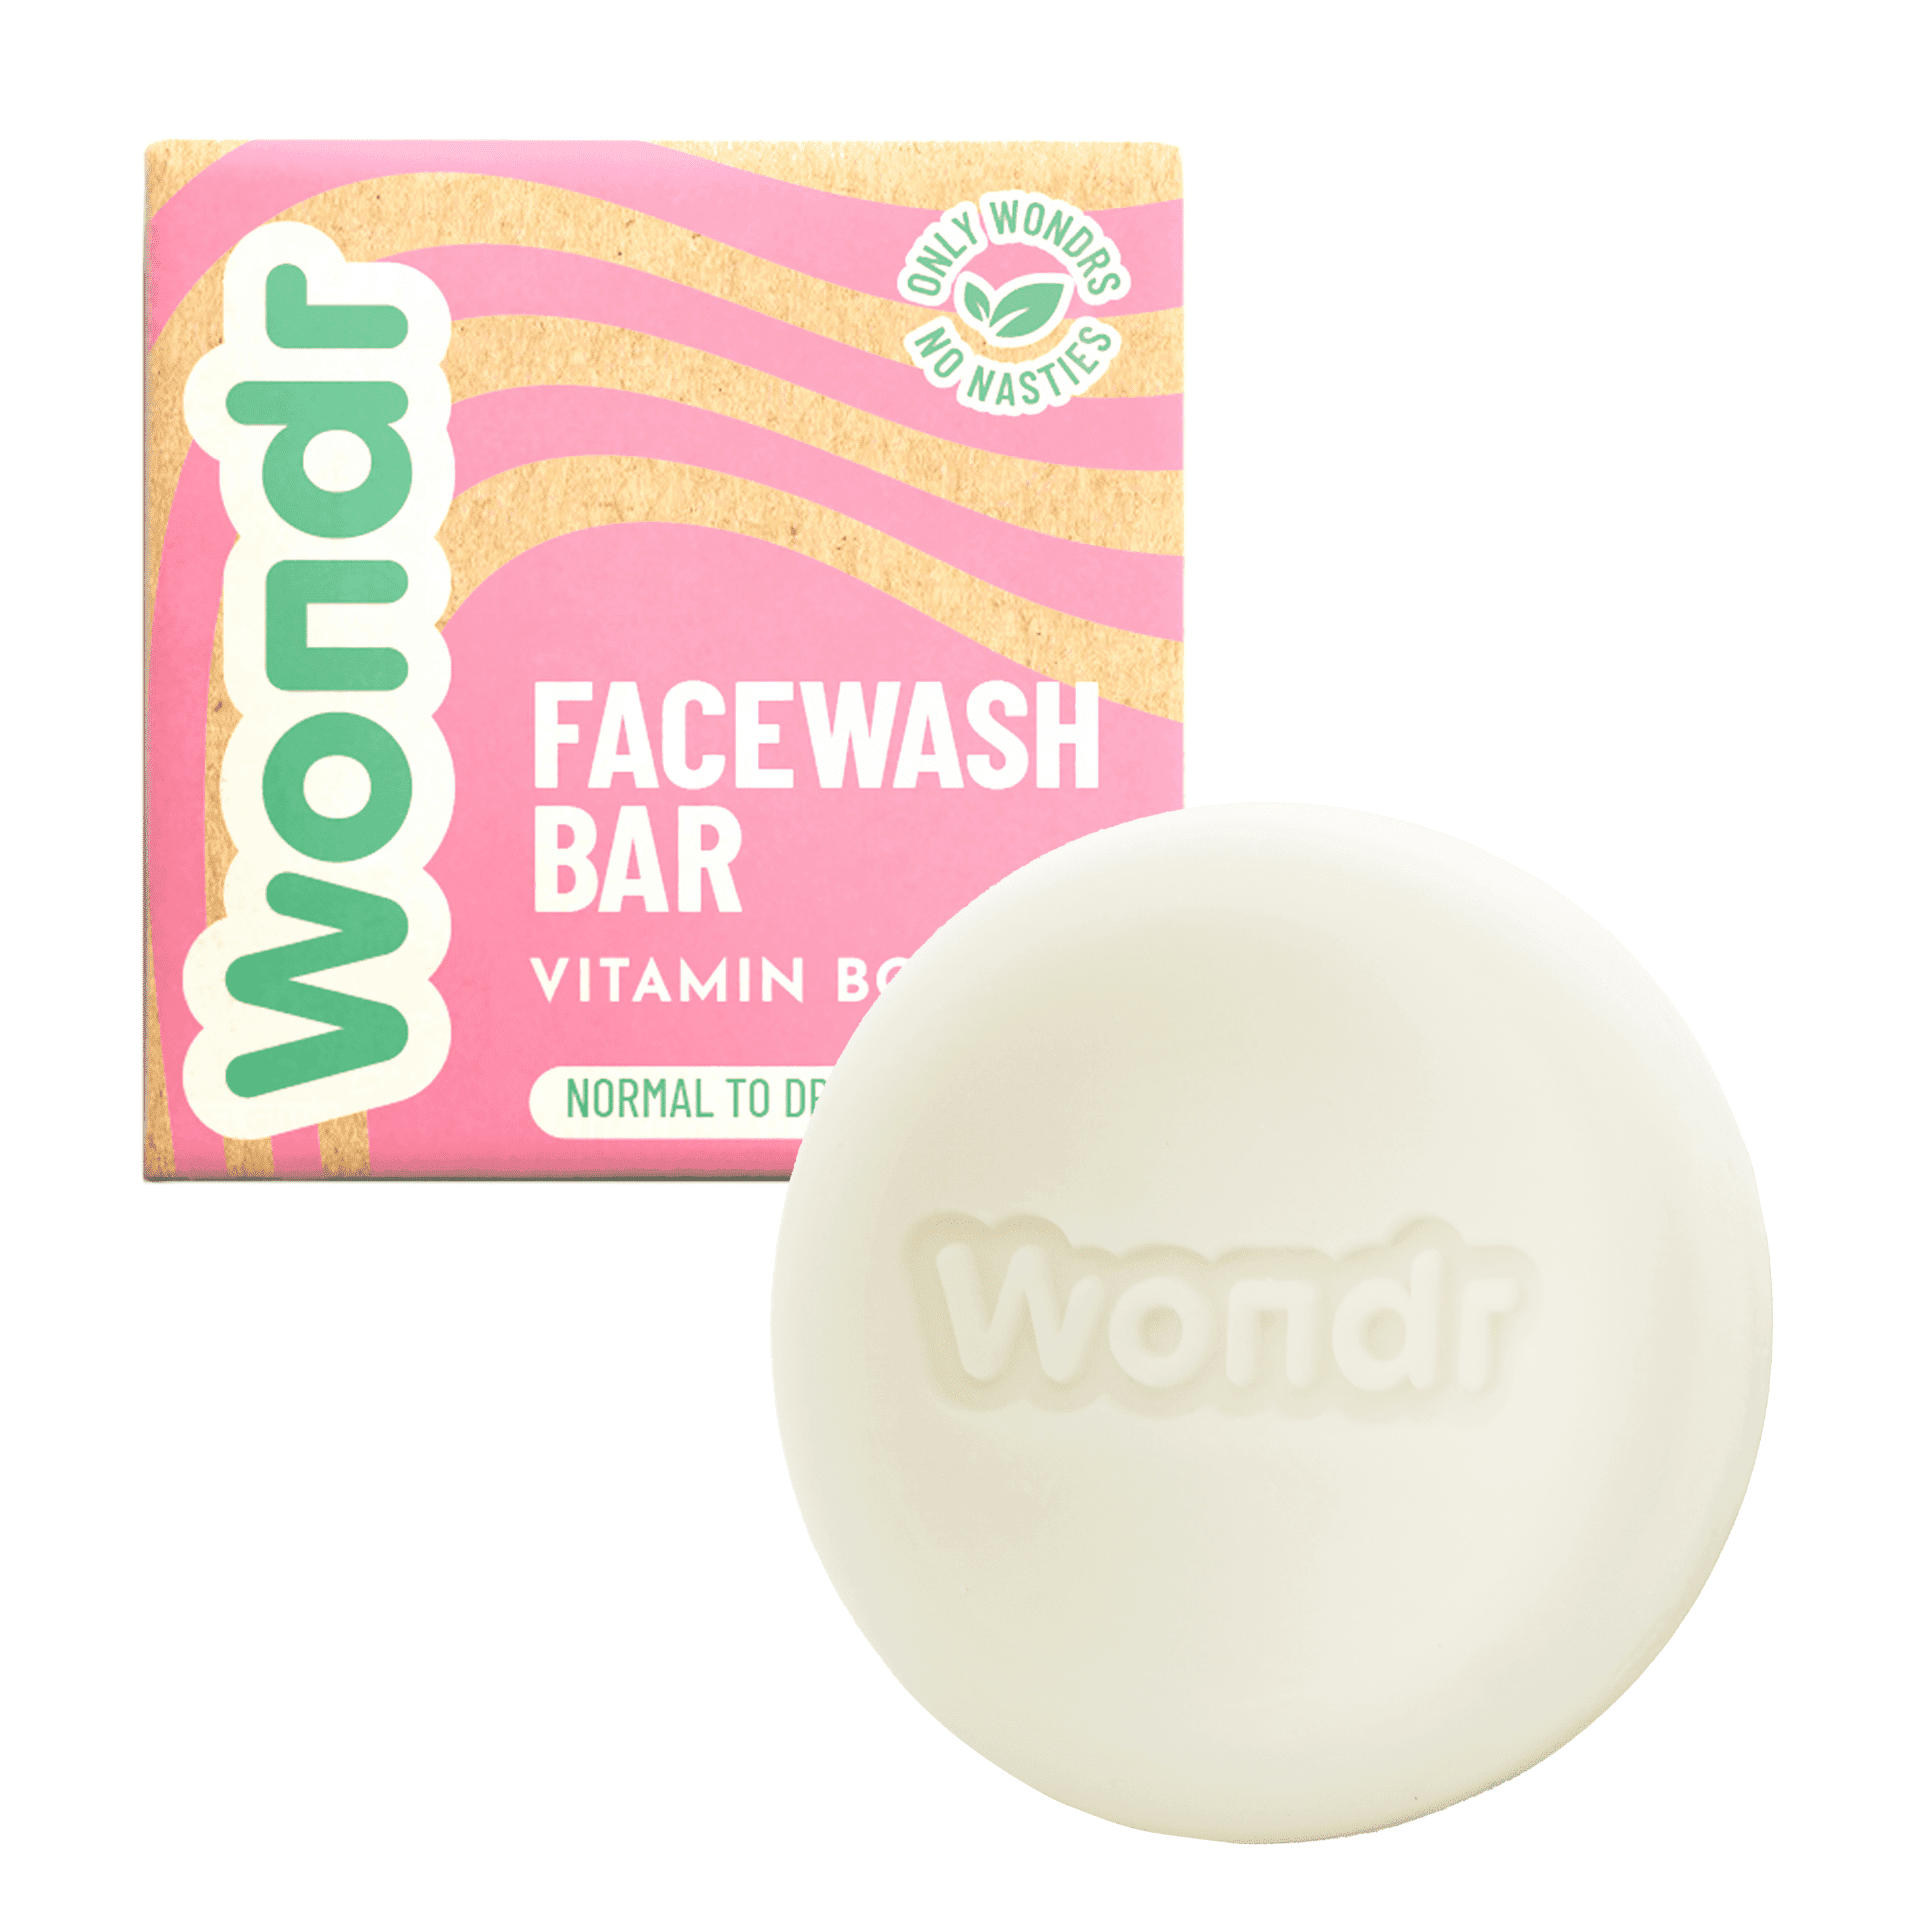 WONDR Facewash Bar Vitamin Boost